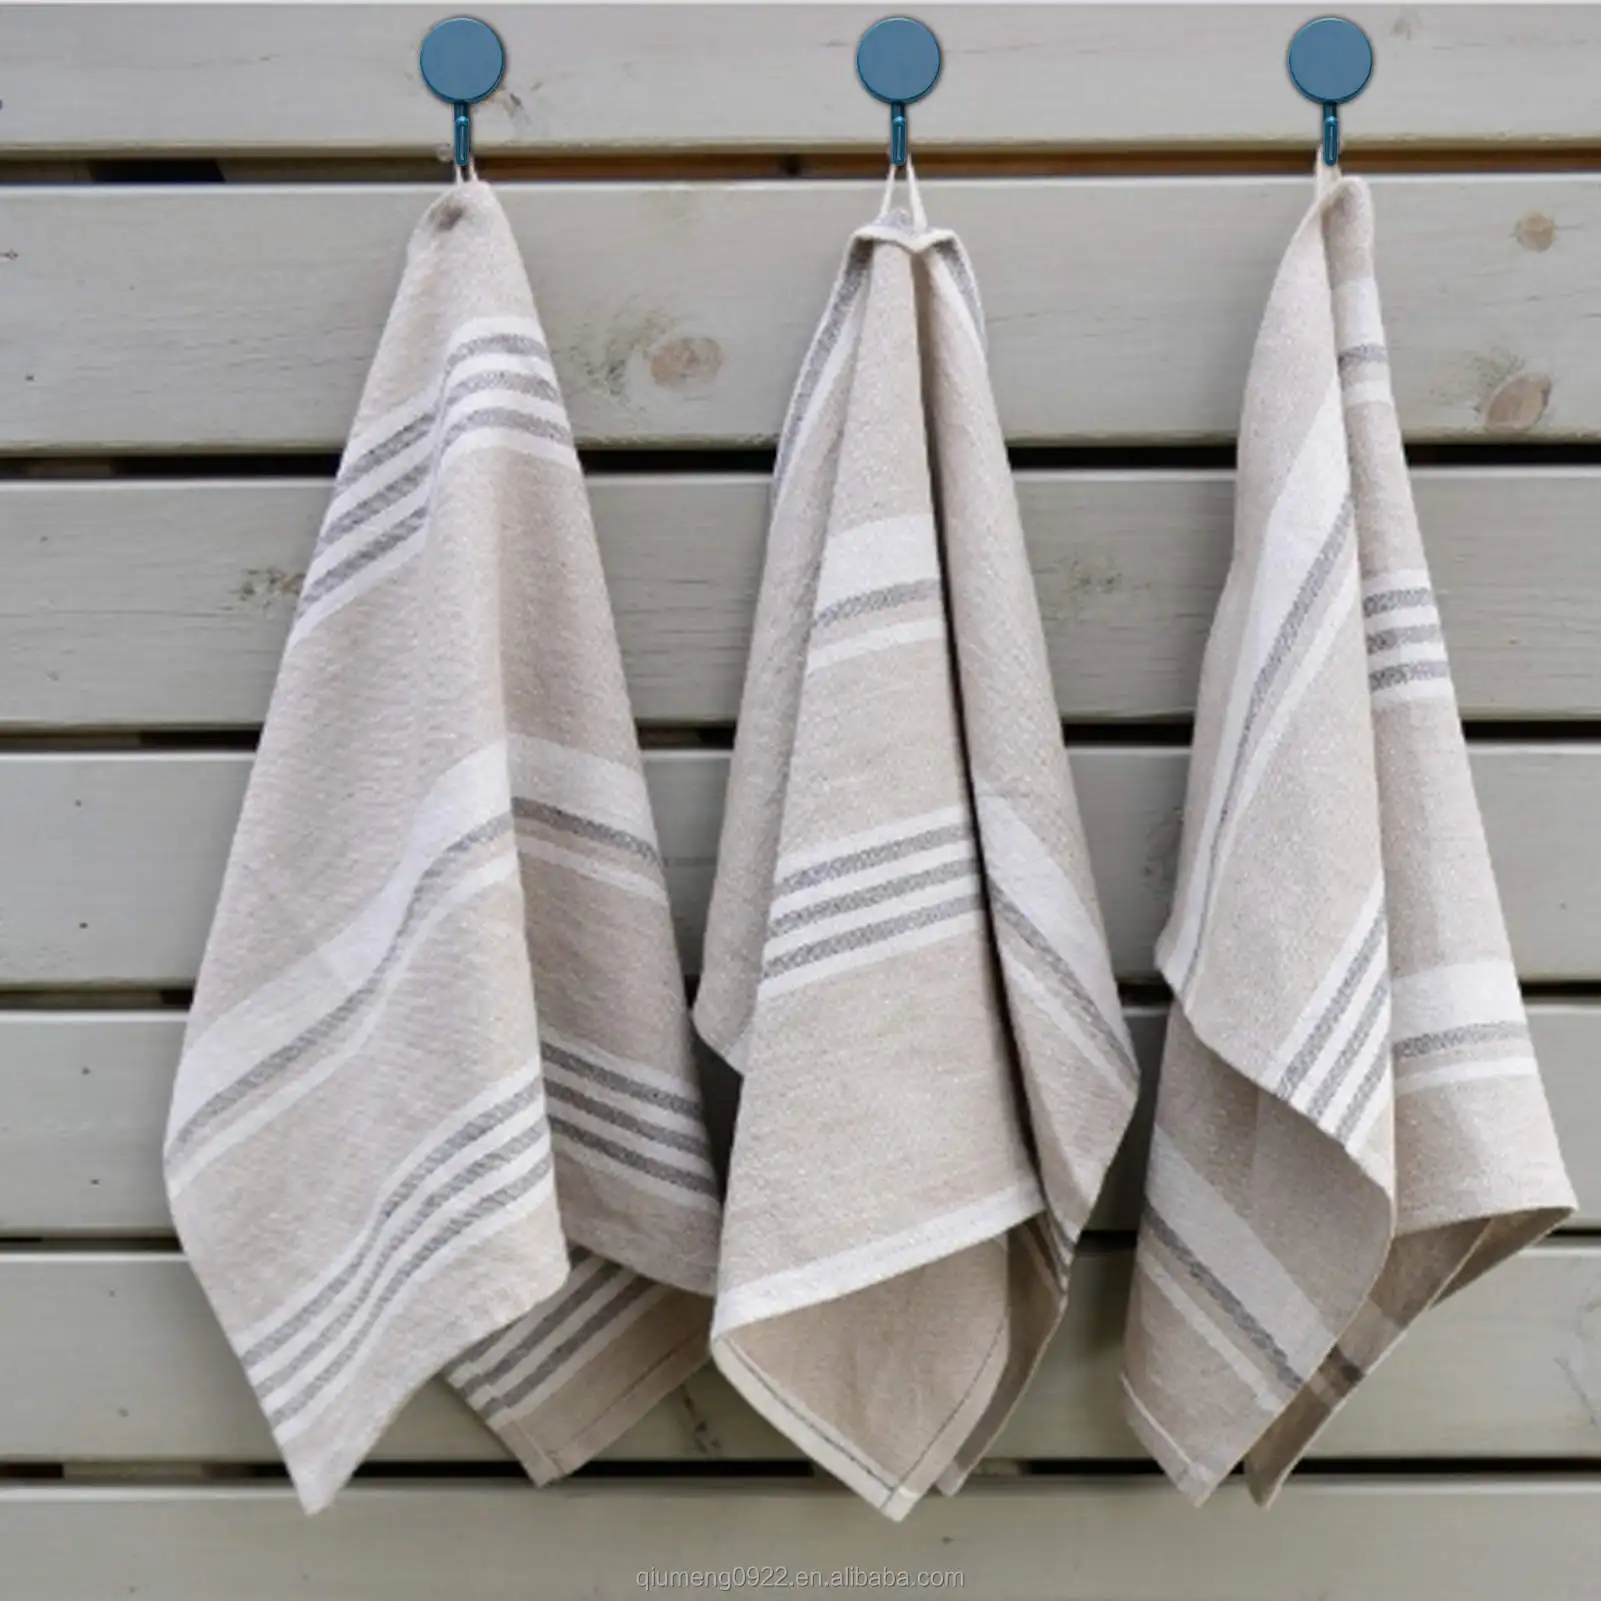 Wall Towel Hanger For Kitchen Bathroom 10PCS Seamless Double-sided Adhesive Hooks Strong Bearing Towel Hook Keys Rack Waterproof